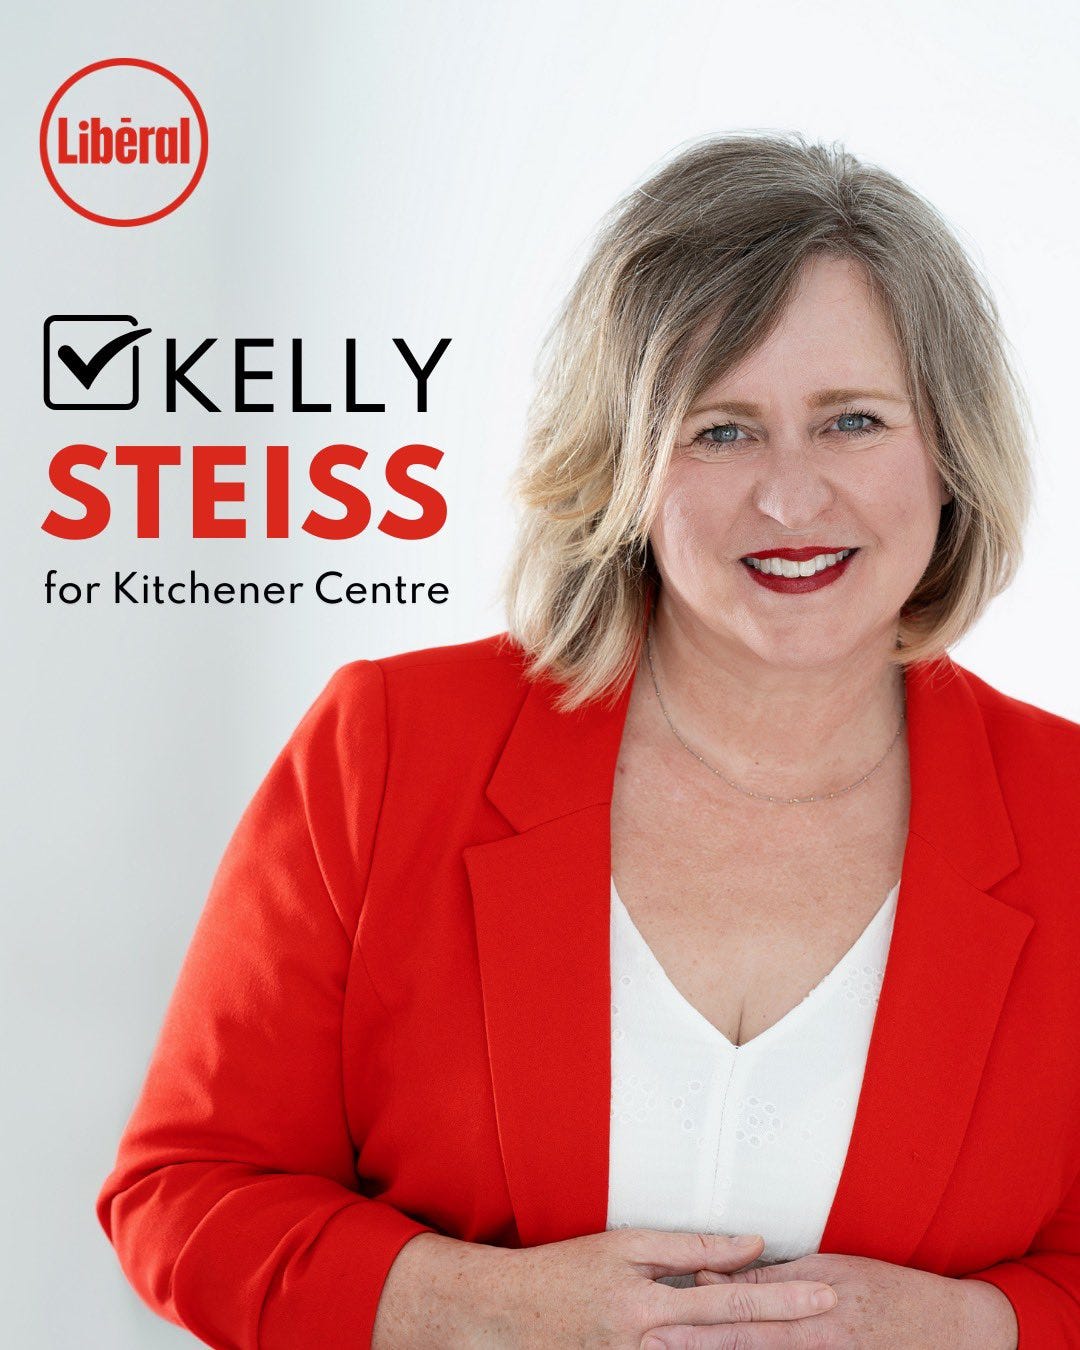 Header from Kelly Steiss' website